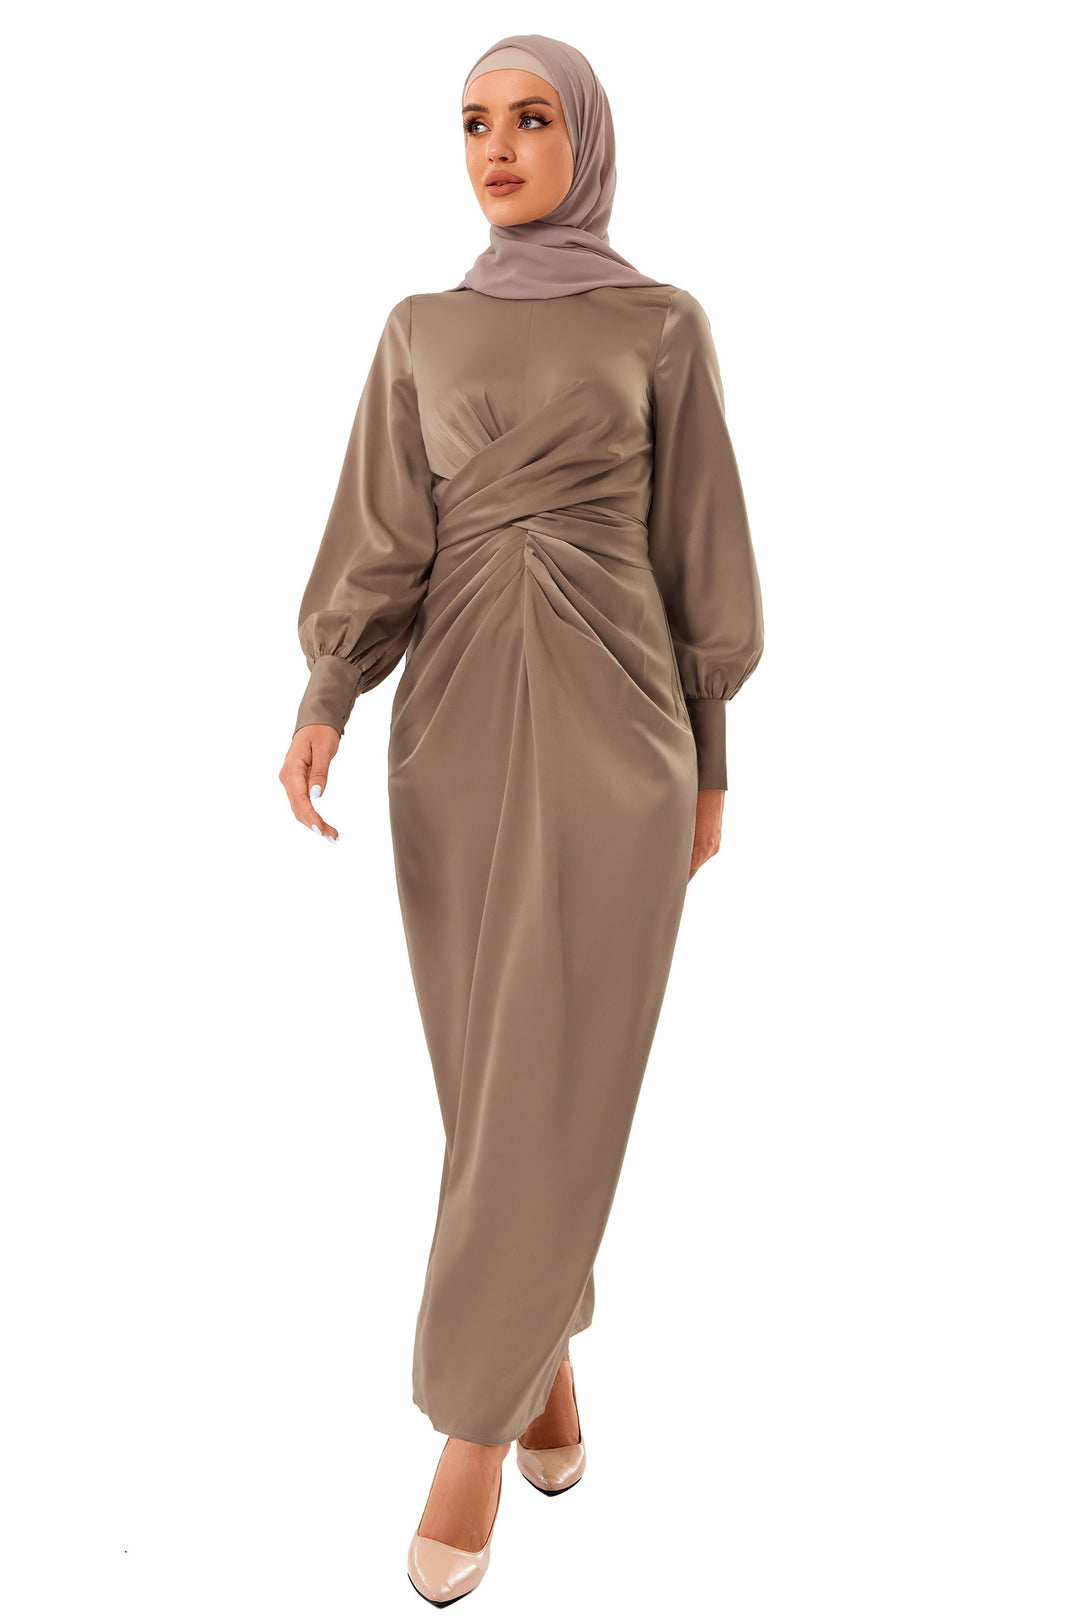 Urban Modesty - Zana Criss Cross Satin Maxi Dress (More Color Available)